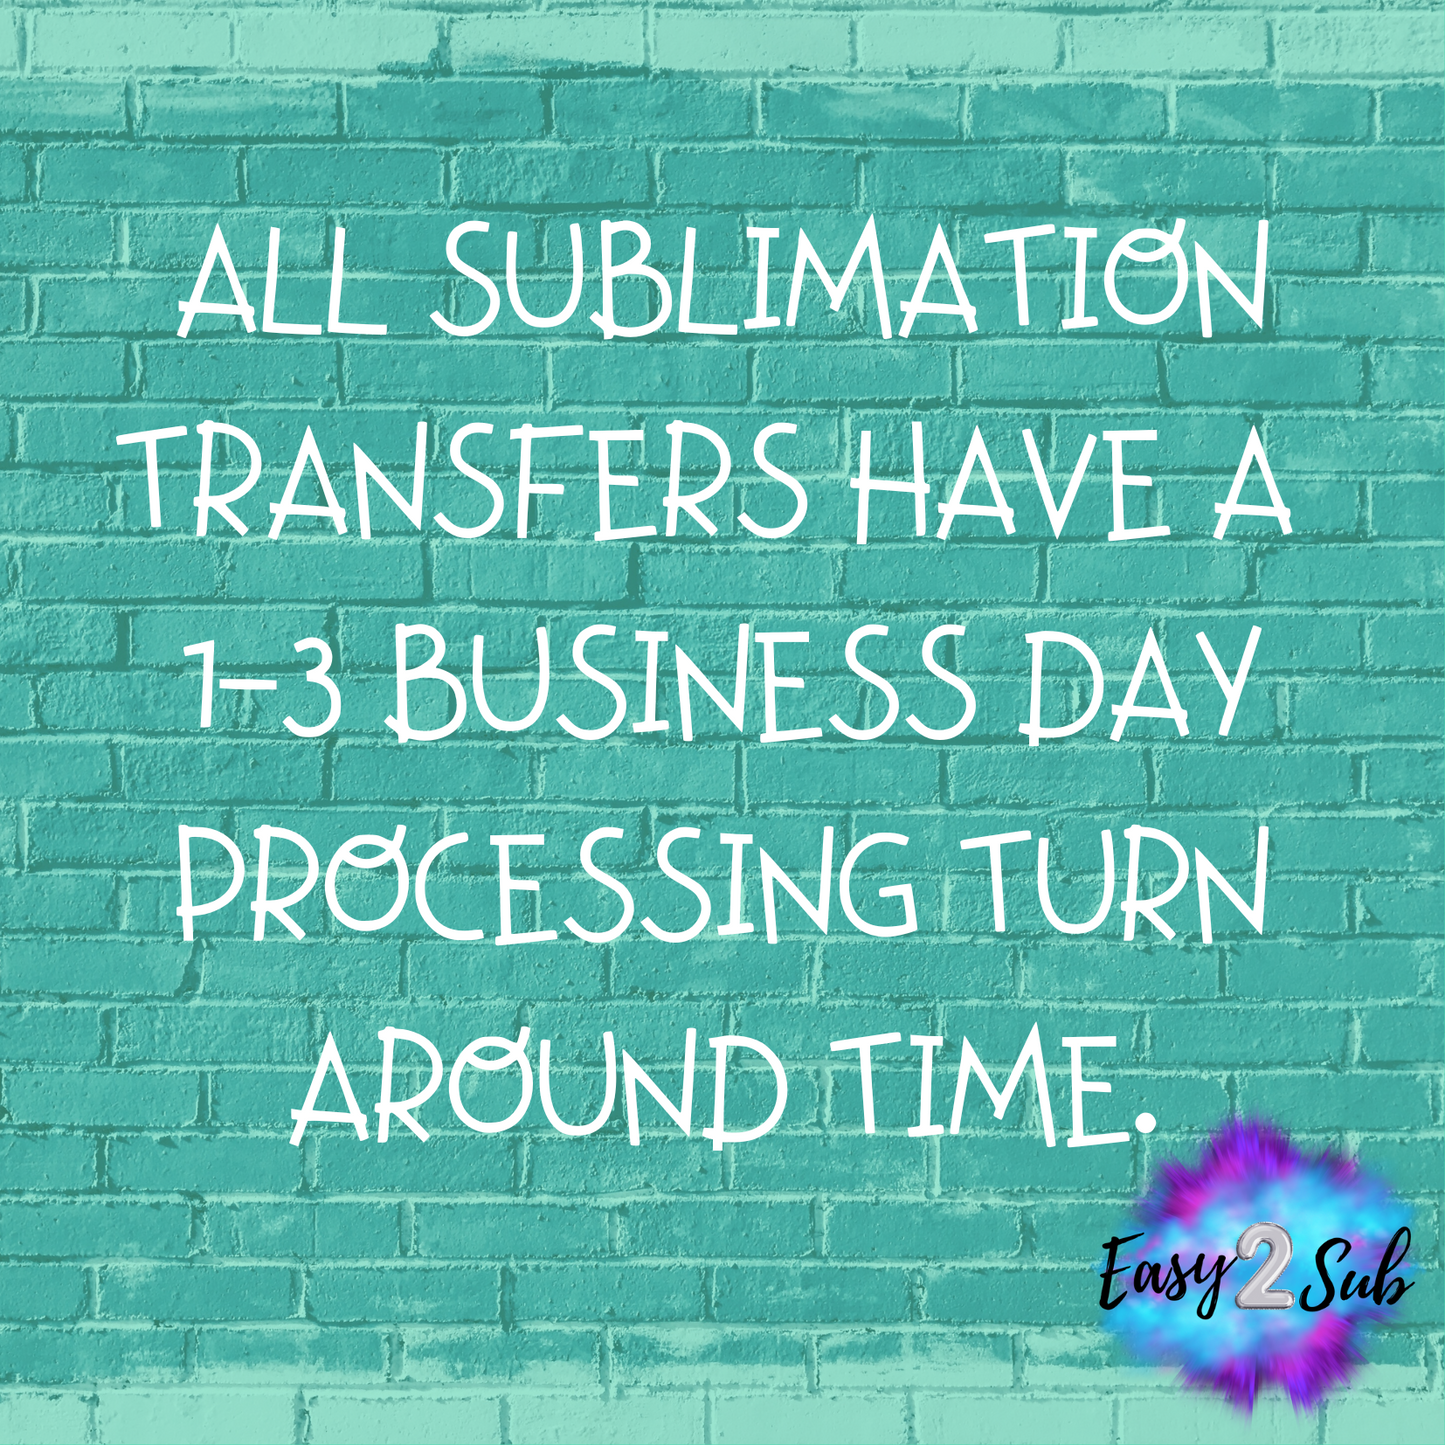 Bah Humbug Sublimation Transfer Print, Ready To Press Sublimation Transfer, Image transfer, T-Shirt Transfer Sheet